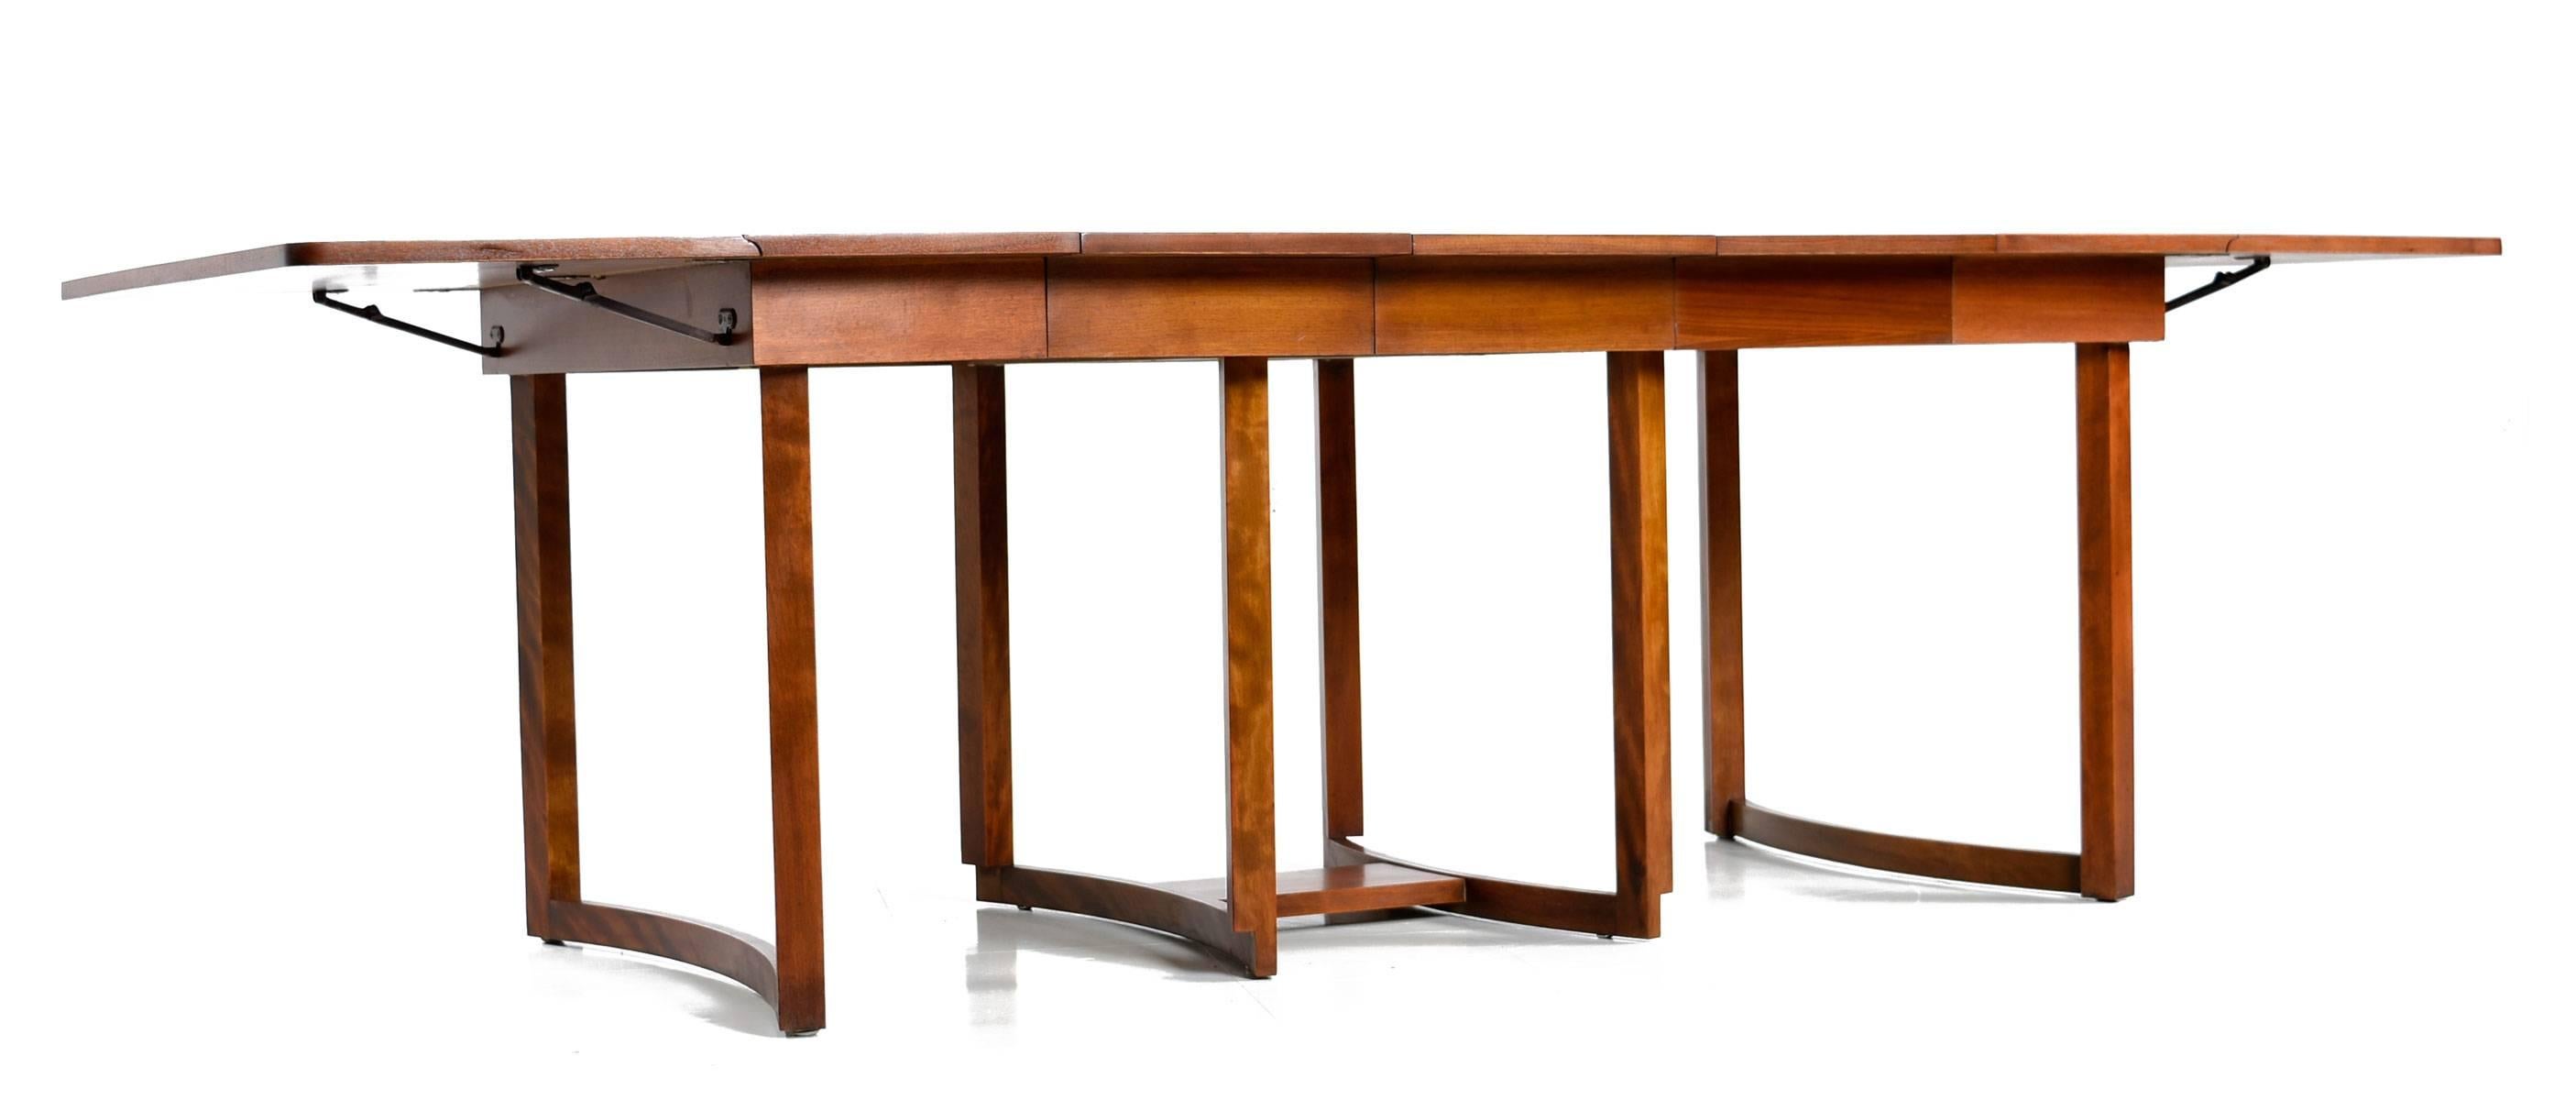 Mid-20th Century Refinished Vintage Robsjohn-Gibbings Expanding Table